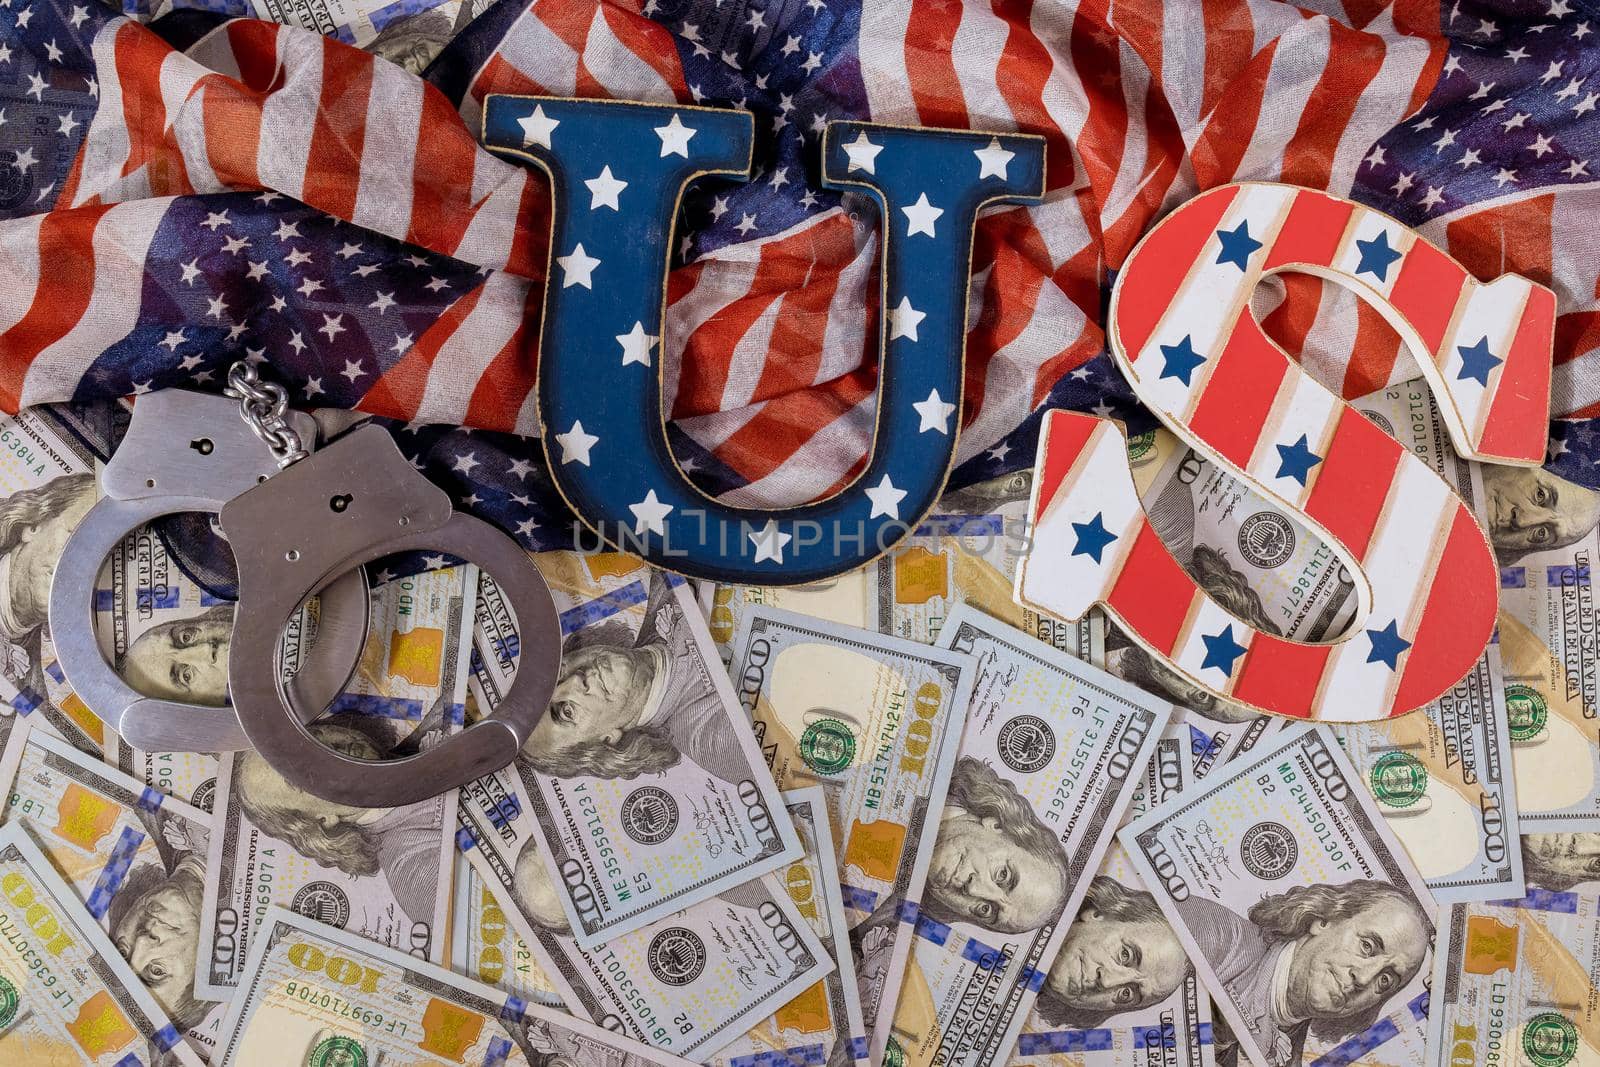 American financial arrest of property economic US sanctions regulation with USA flag US dollars banknotes Judge gavel